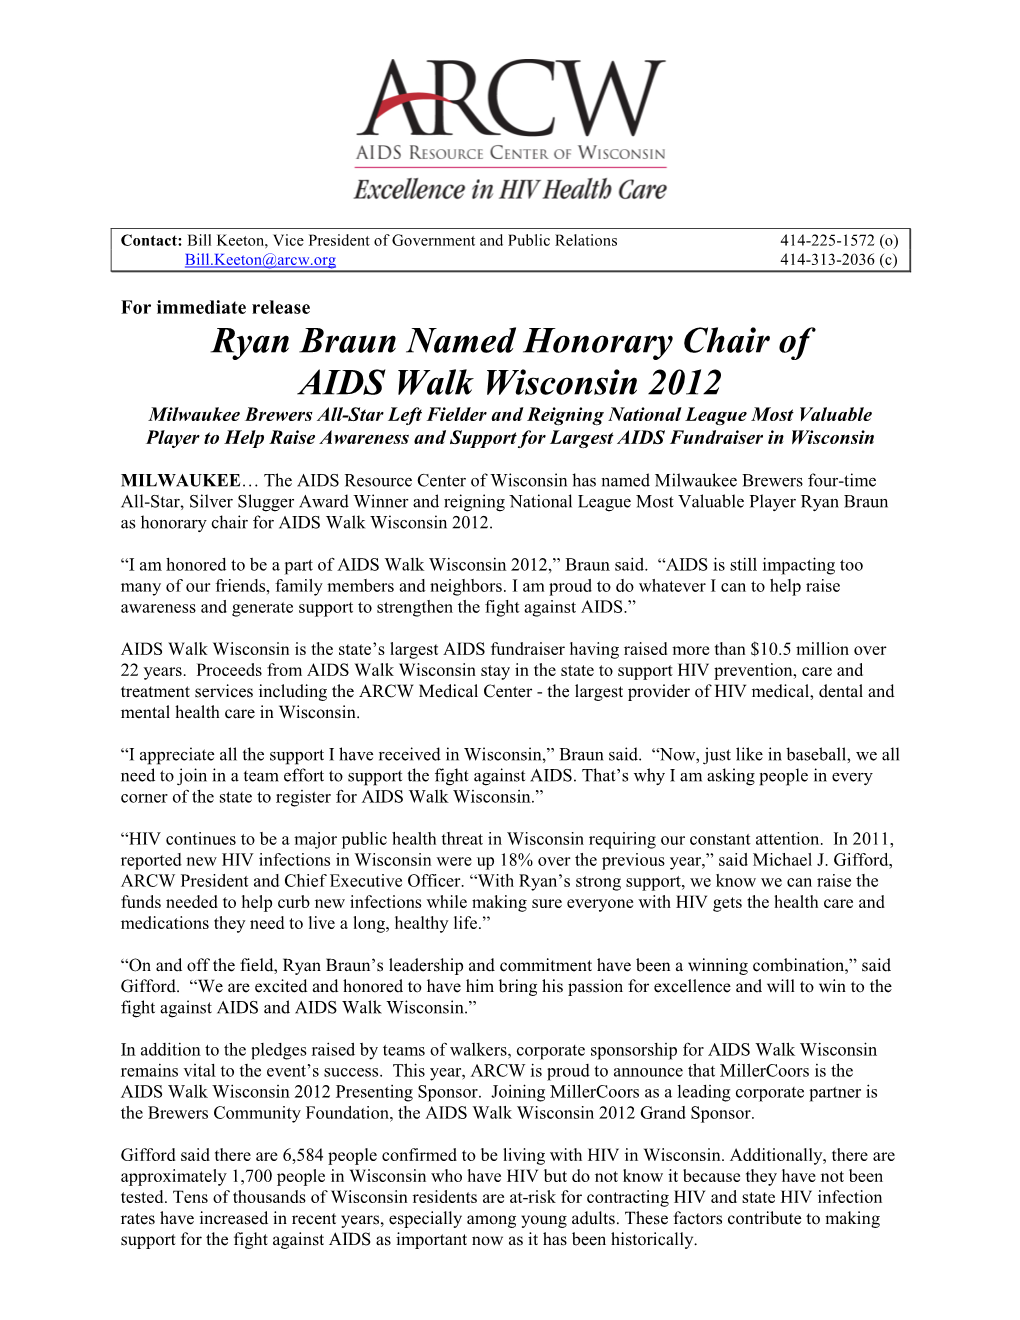 Ryan Braun ARCW Announcement PR FINAL